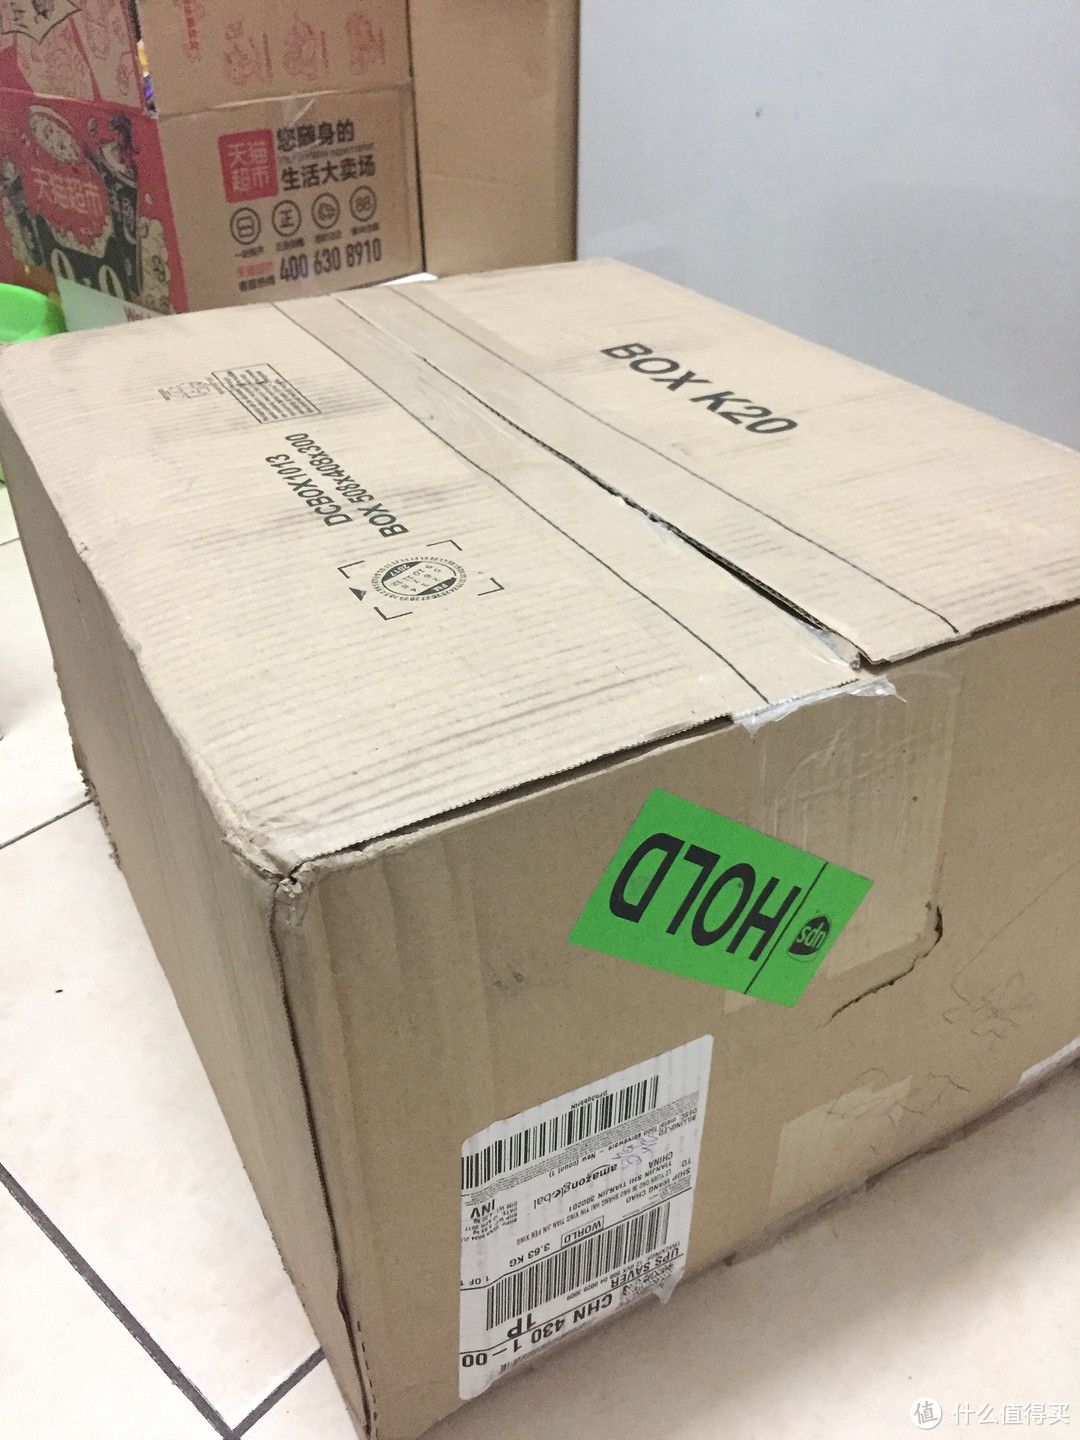 UPS的包裹，看上去并不怎么结实